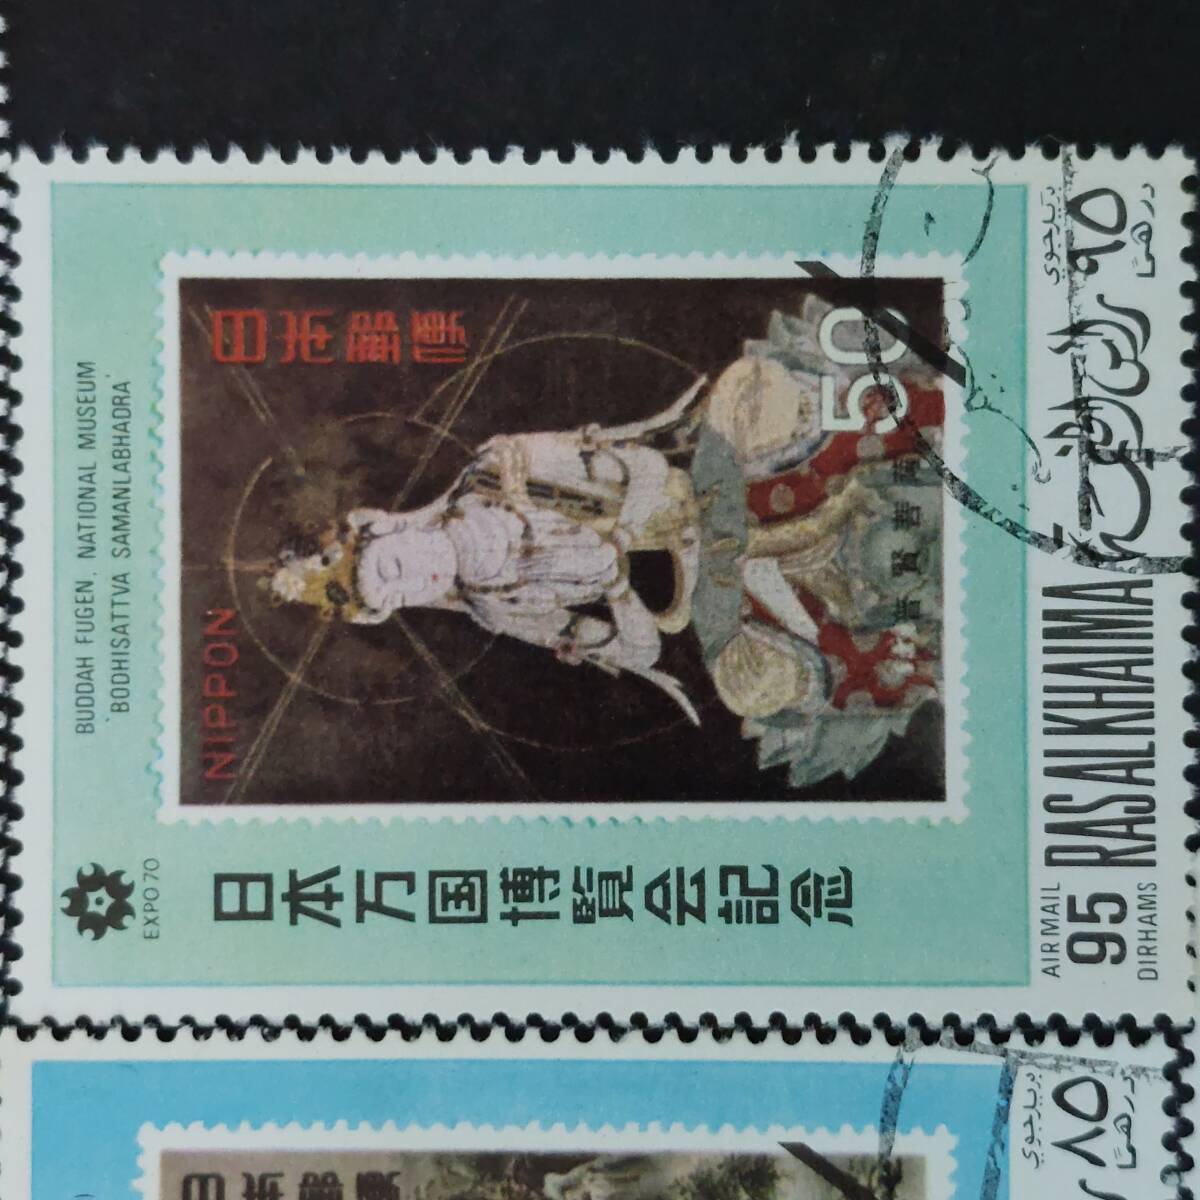 J579 ラス・アル・ハイマ（アラブ首長国連邦構成国）切手「1970年大阪万博記念切手:日本切手をデザインした切手8種完」1970年発行 使用済み_画像7